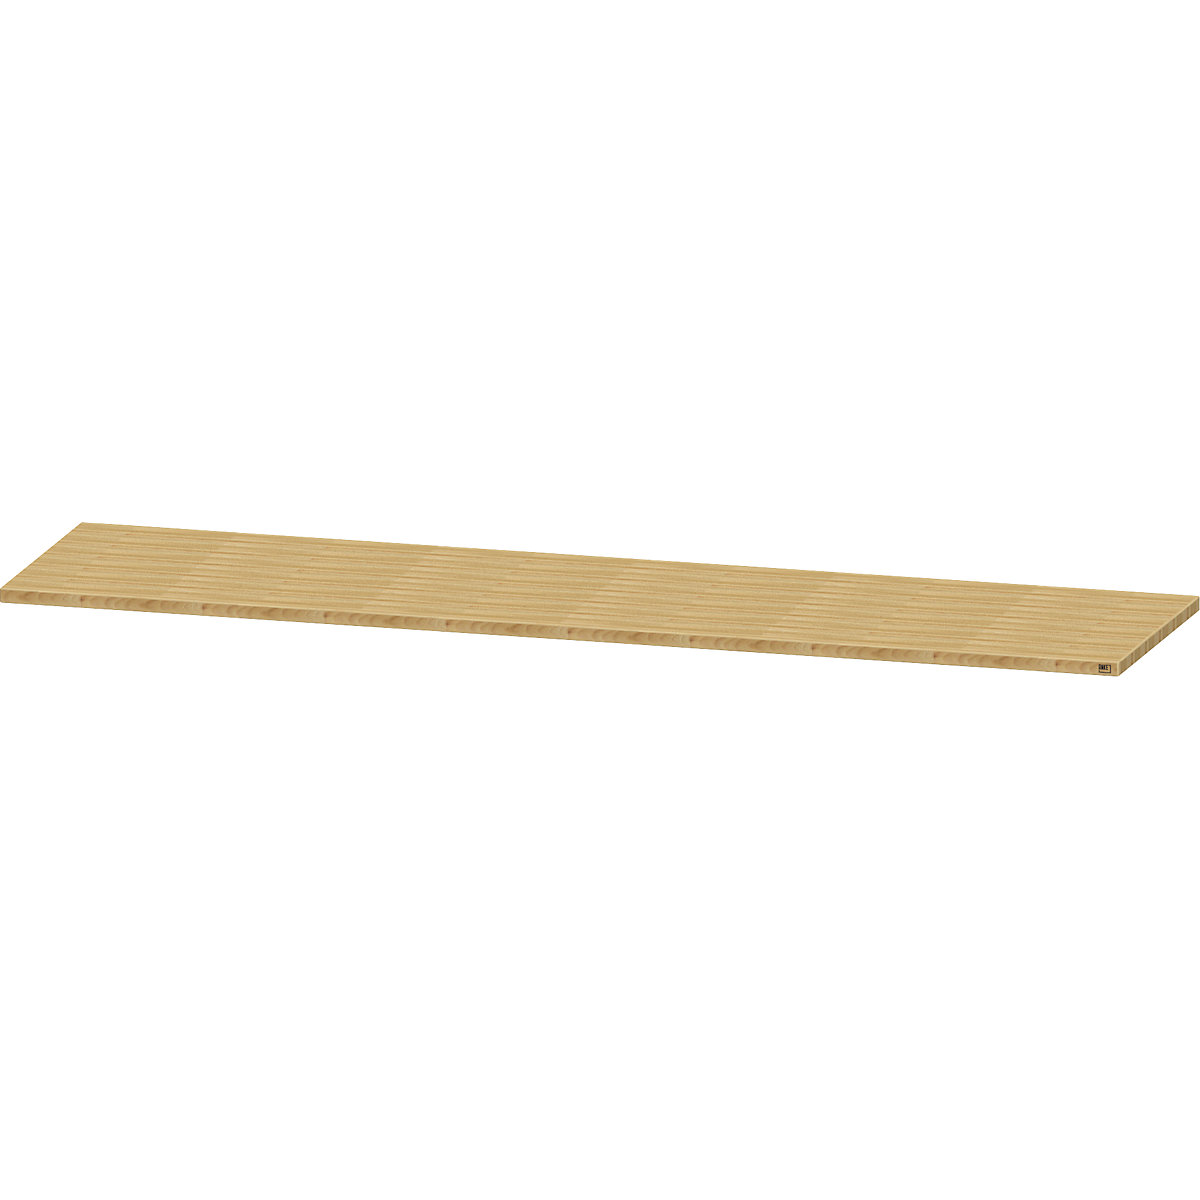 Worktop for workbench – ANKE, solid copper beech worktop, width 2800 mm, thickness 40 mm-10